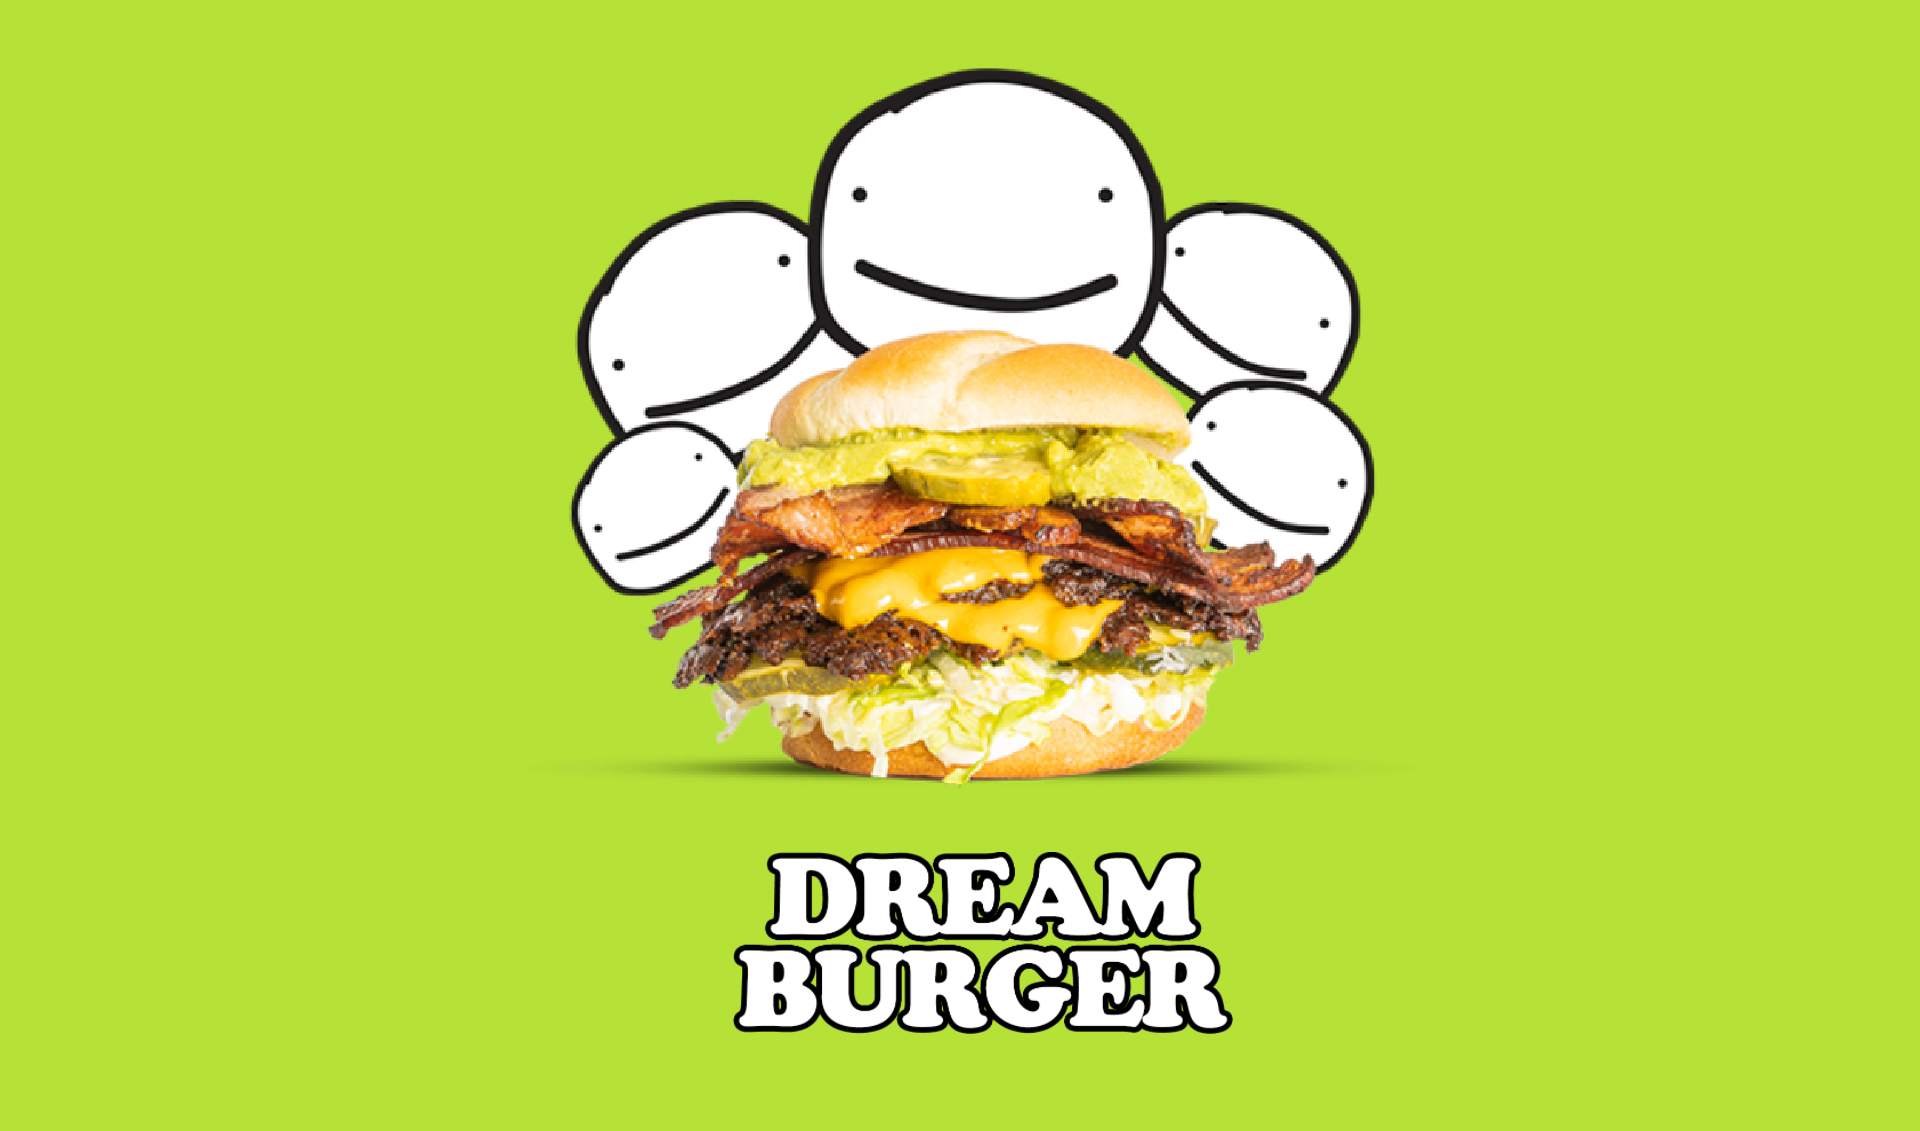 Mr beast burger malaysia